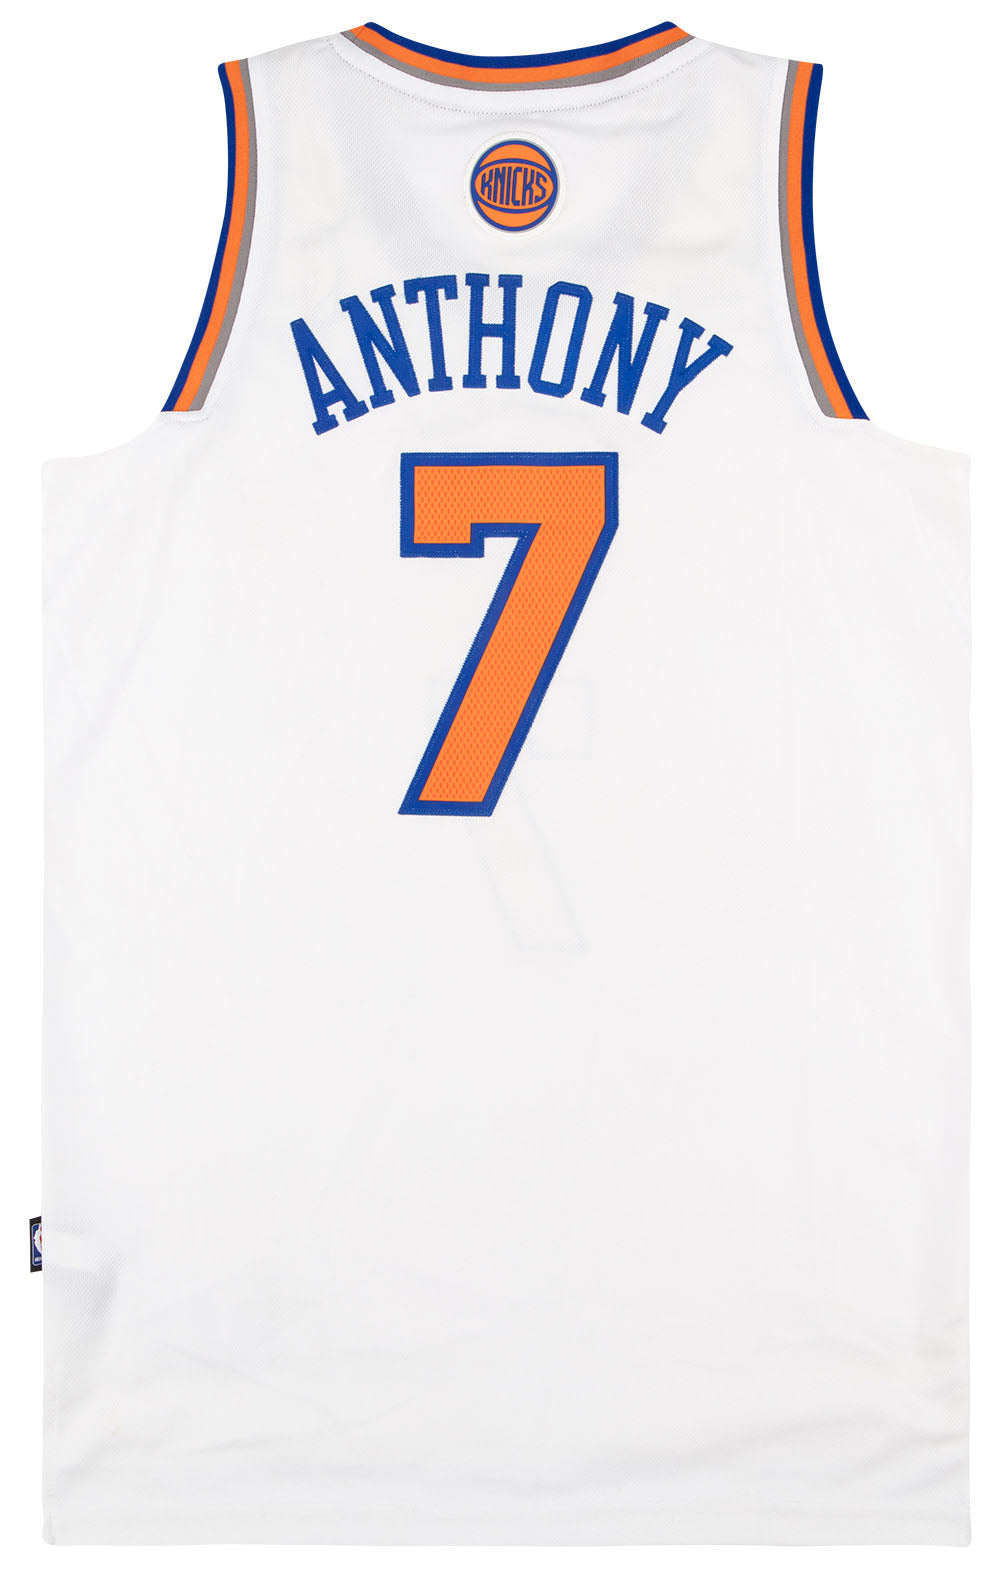 Athletic Knit B1710 Blank 2012-13 NY Knicks Basketball Jerseys